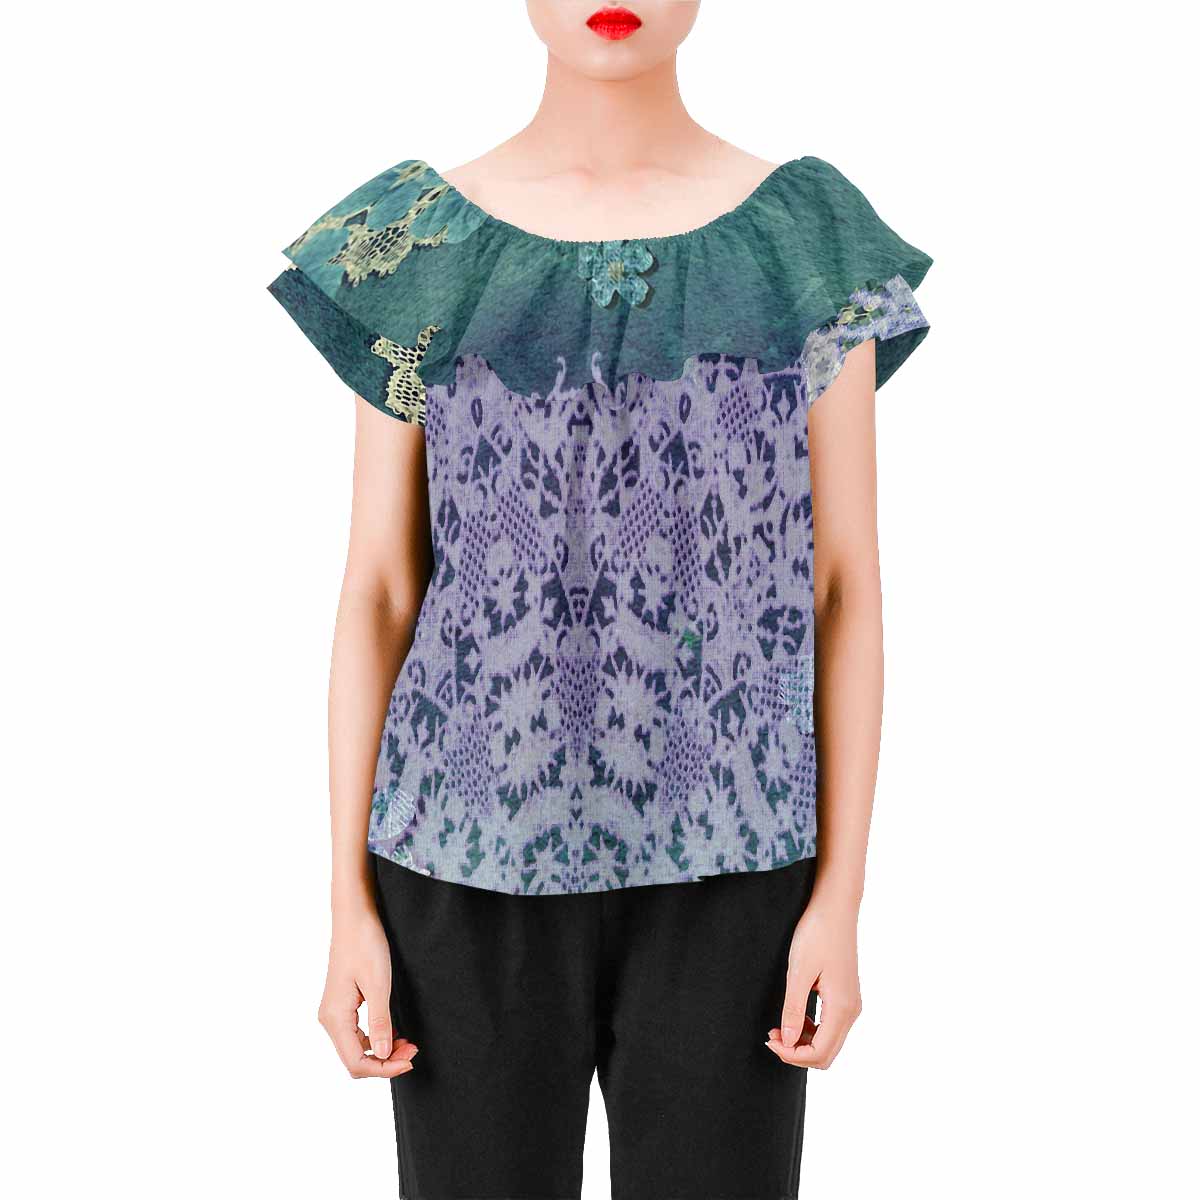 Victorian Lace print Chiffon Blouse, design 05